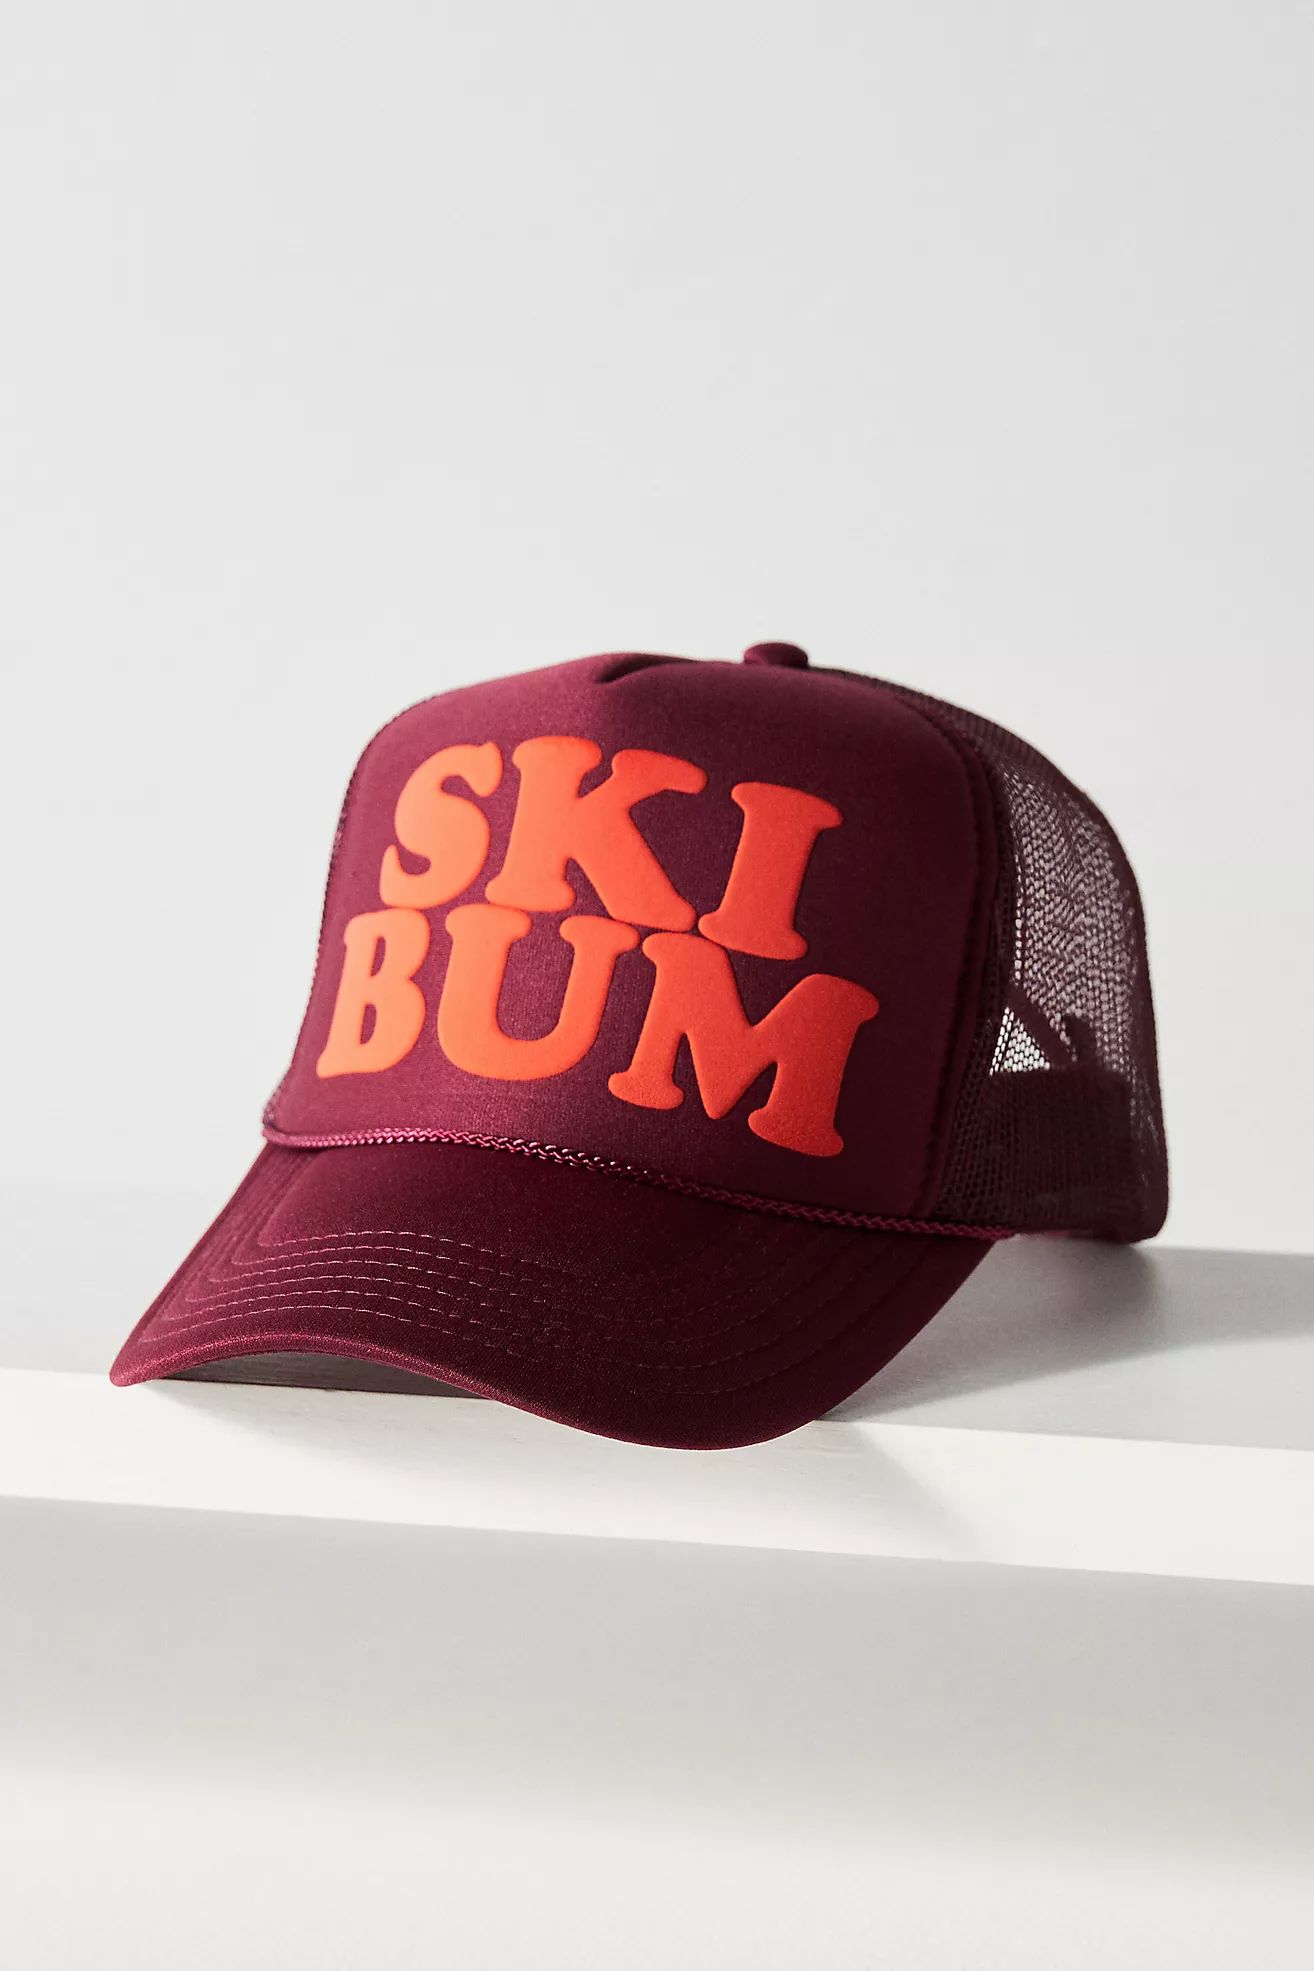 Ascot + Hart Ski Bum Trucker Hat | Anthropologie (US)